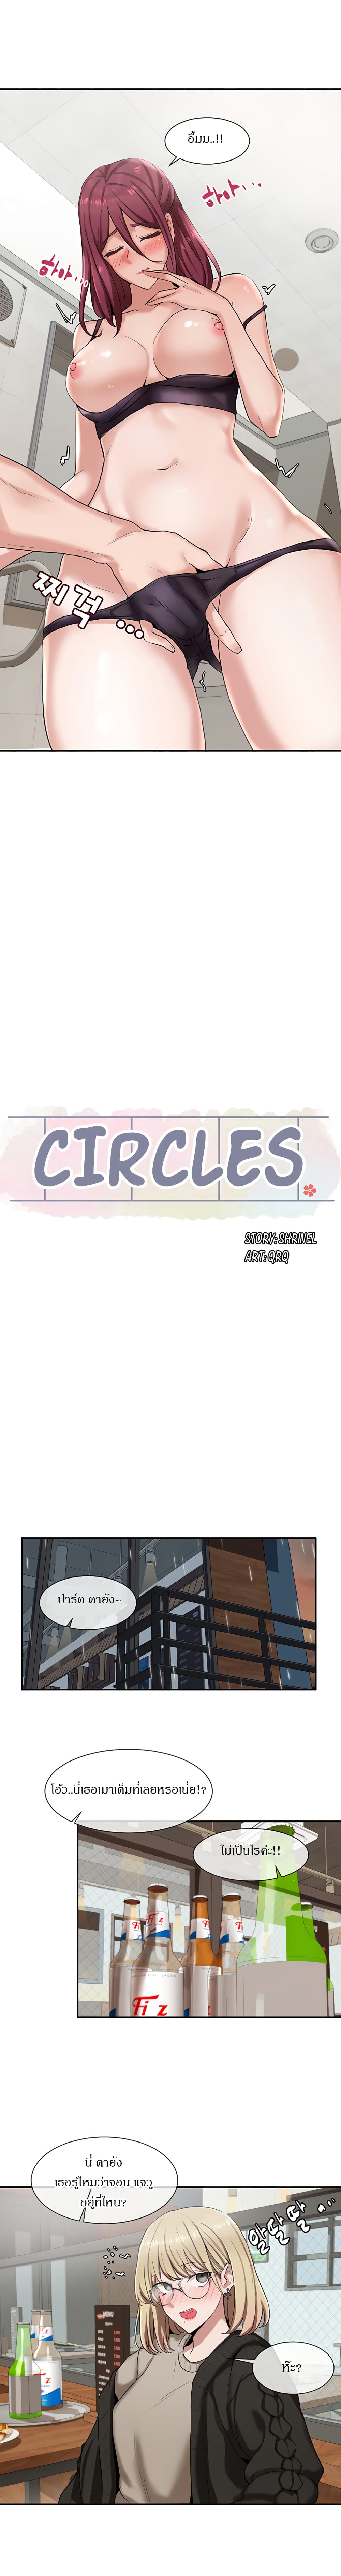 Theater Society (Circles) 7-7